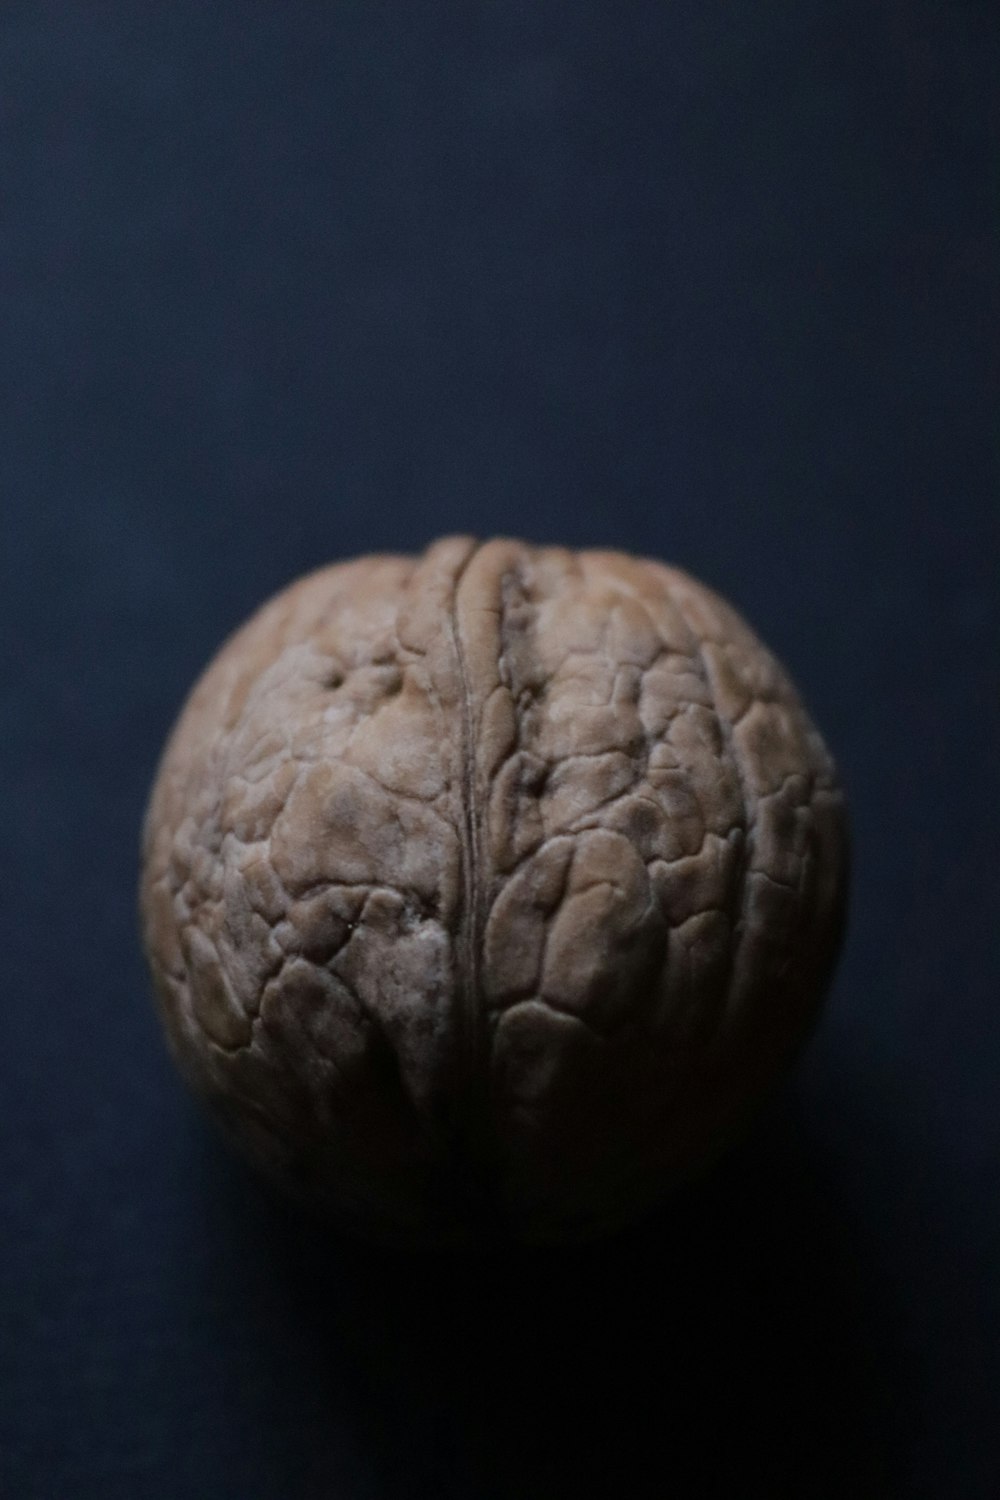 a close up of a walnut on a black surface